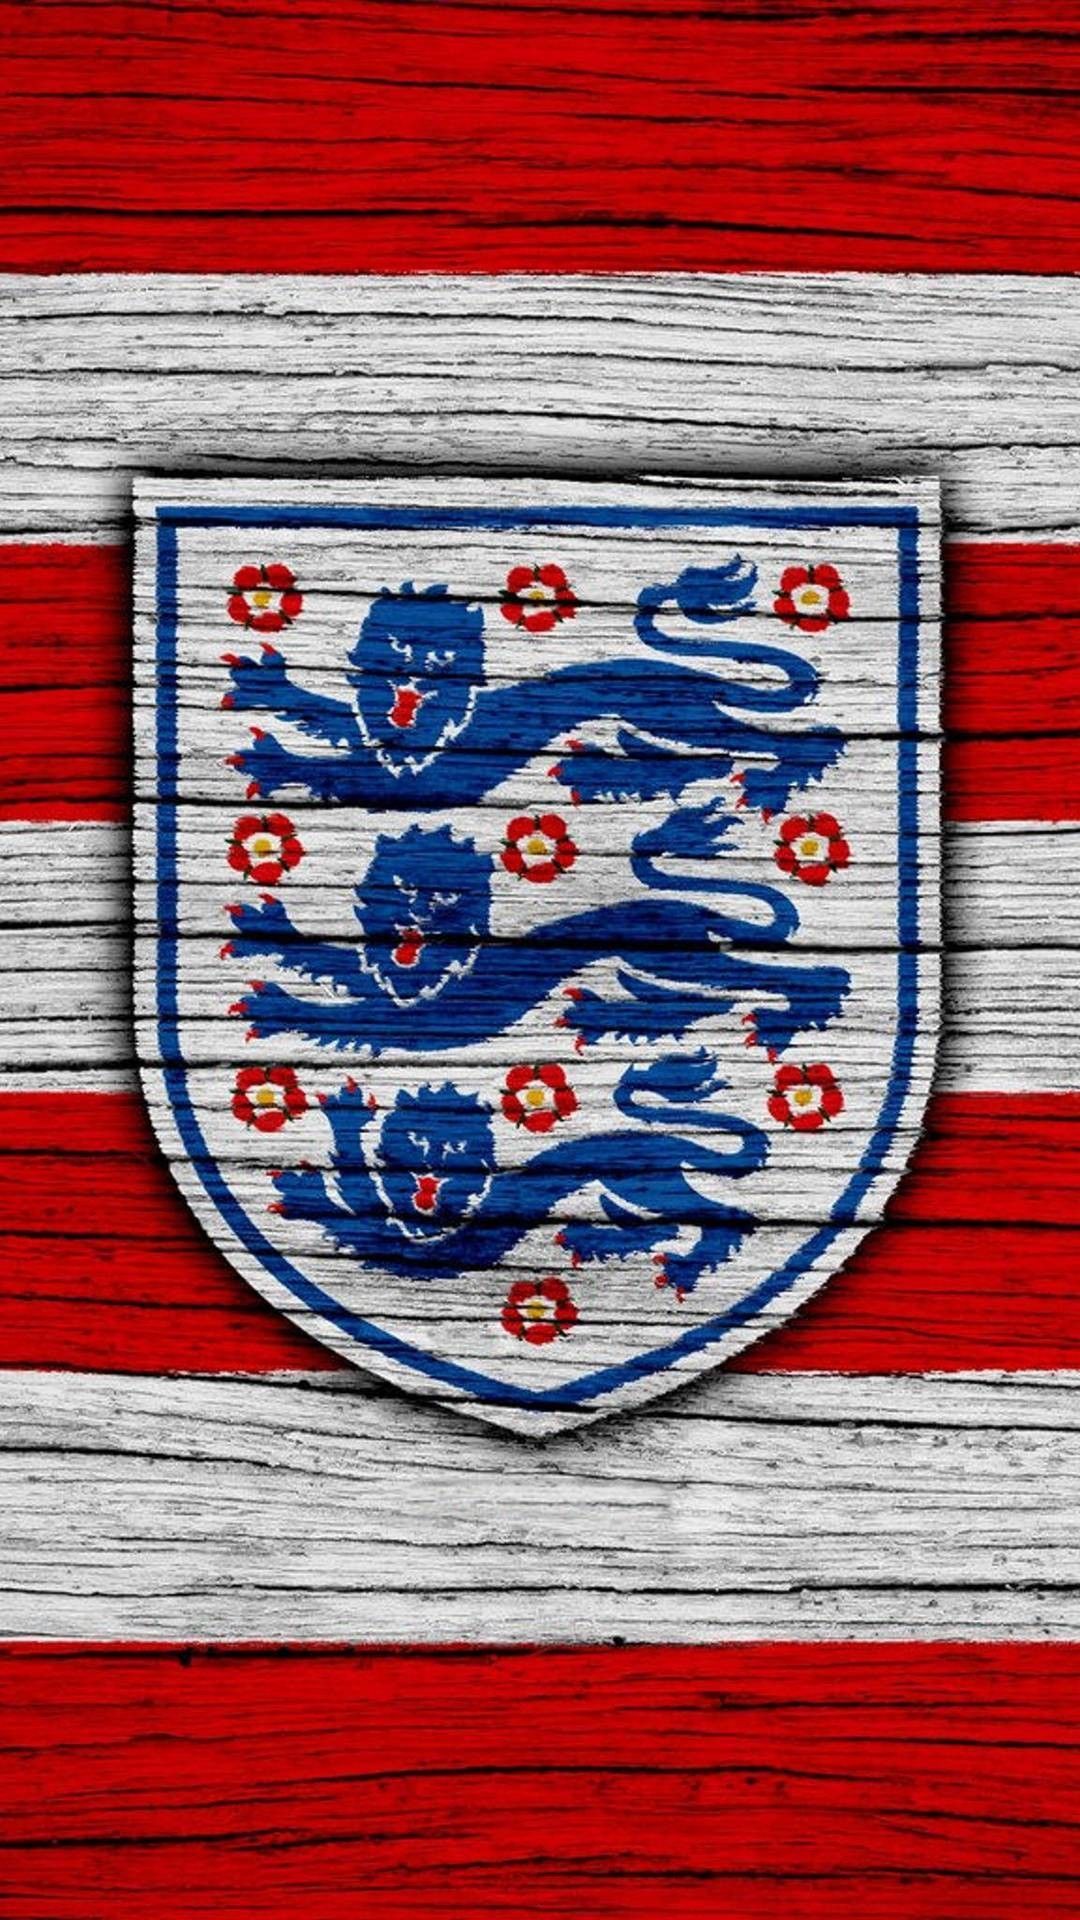 England pic wallpaper. England football, England football team, England national football team